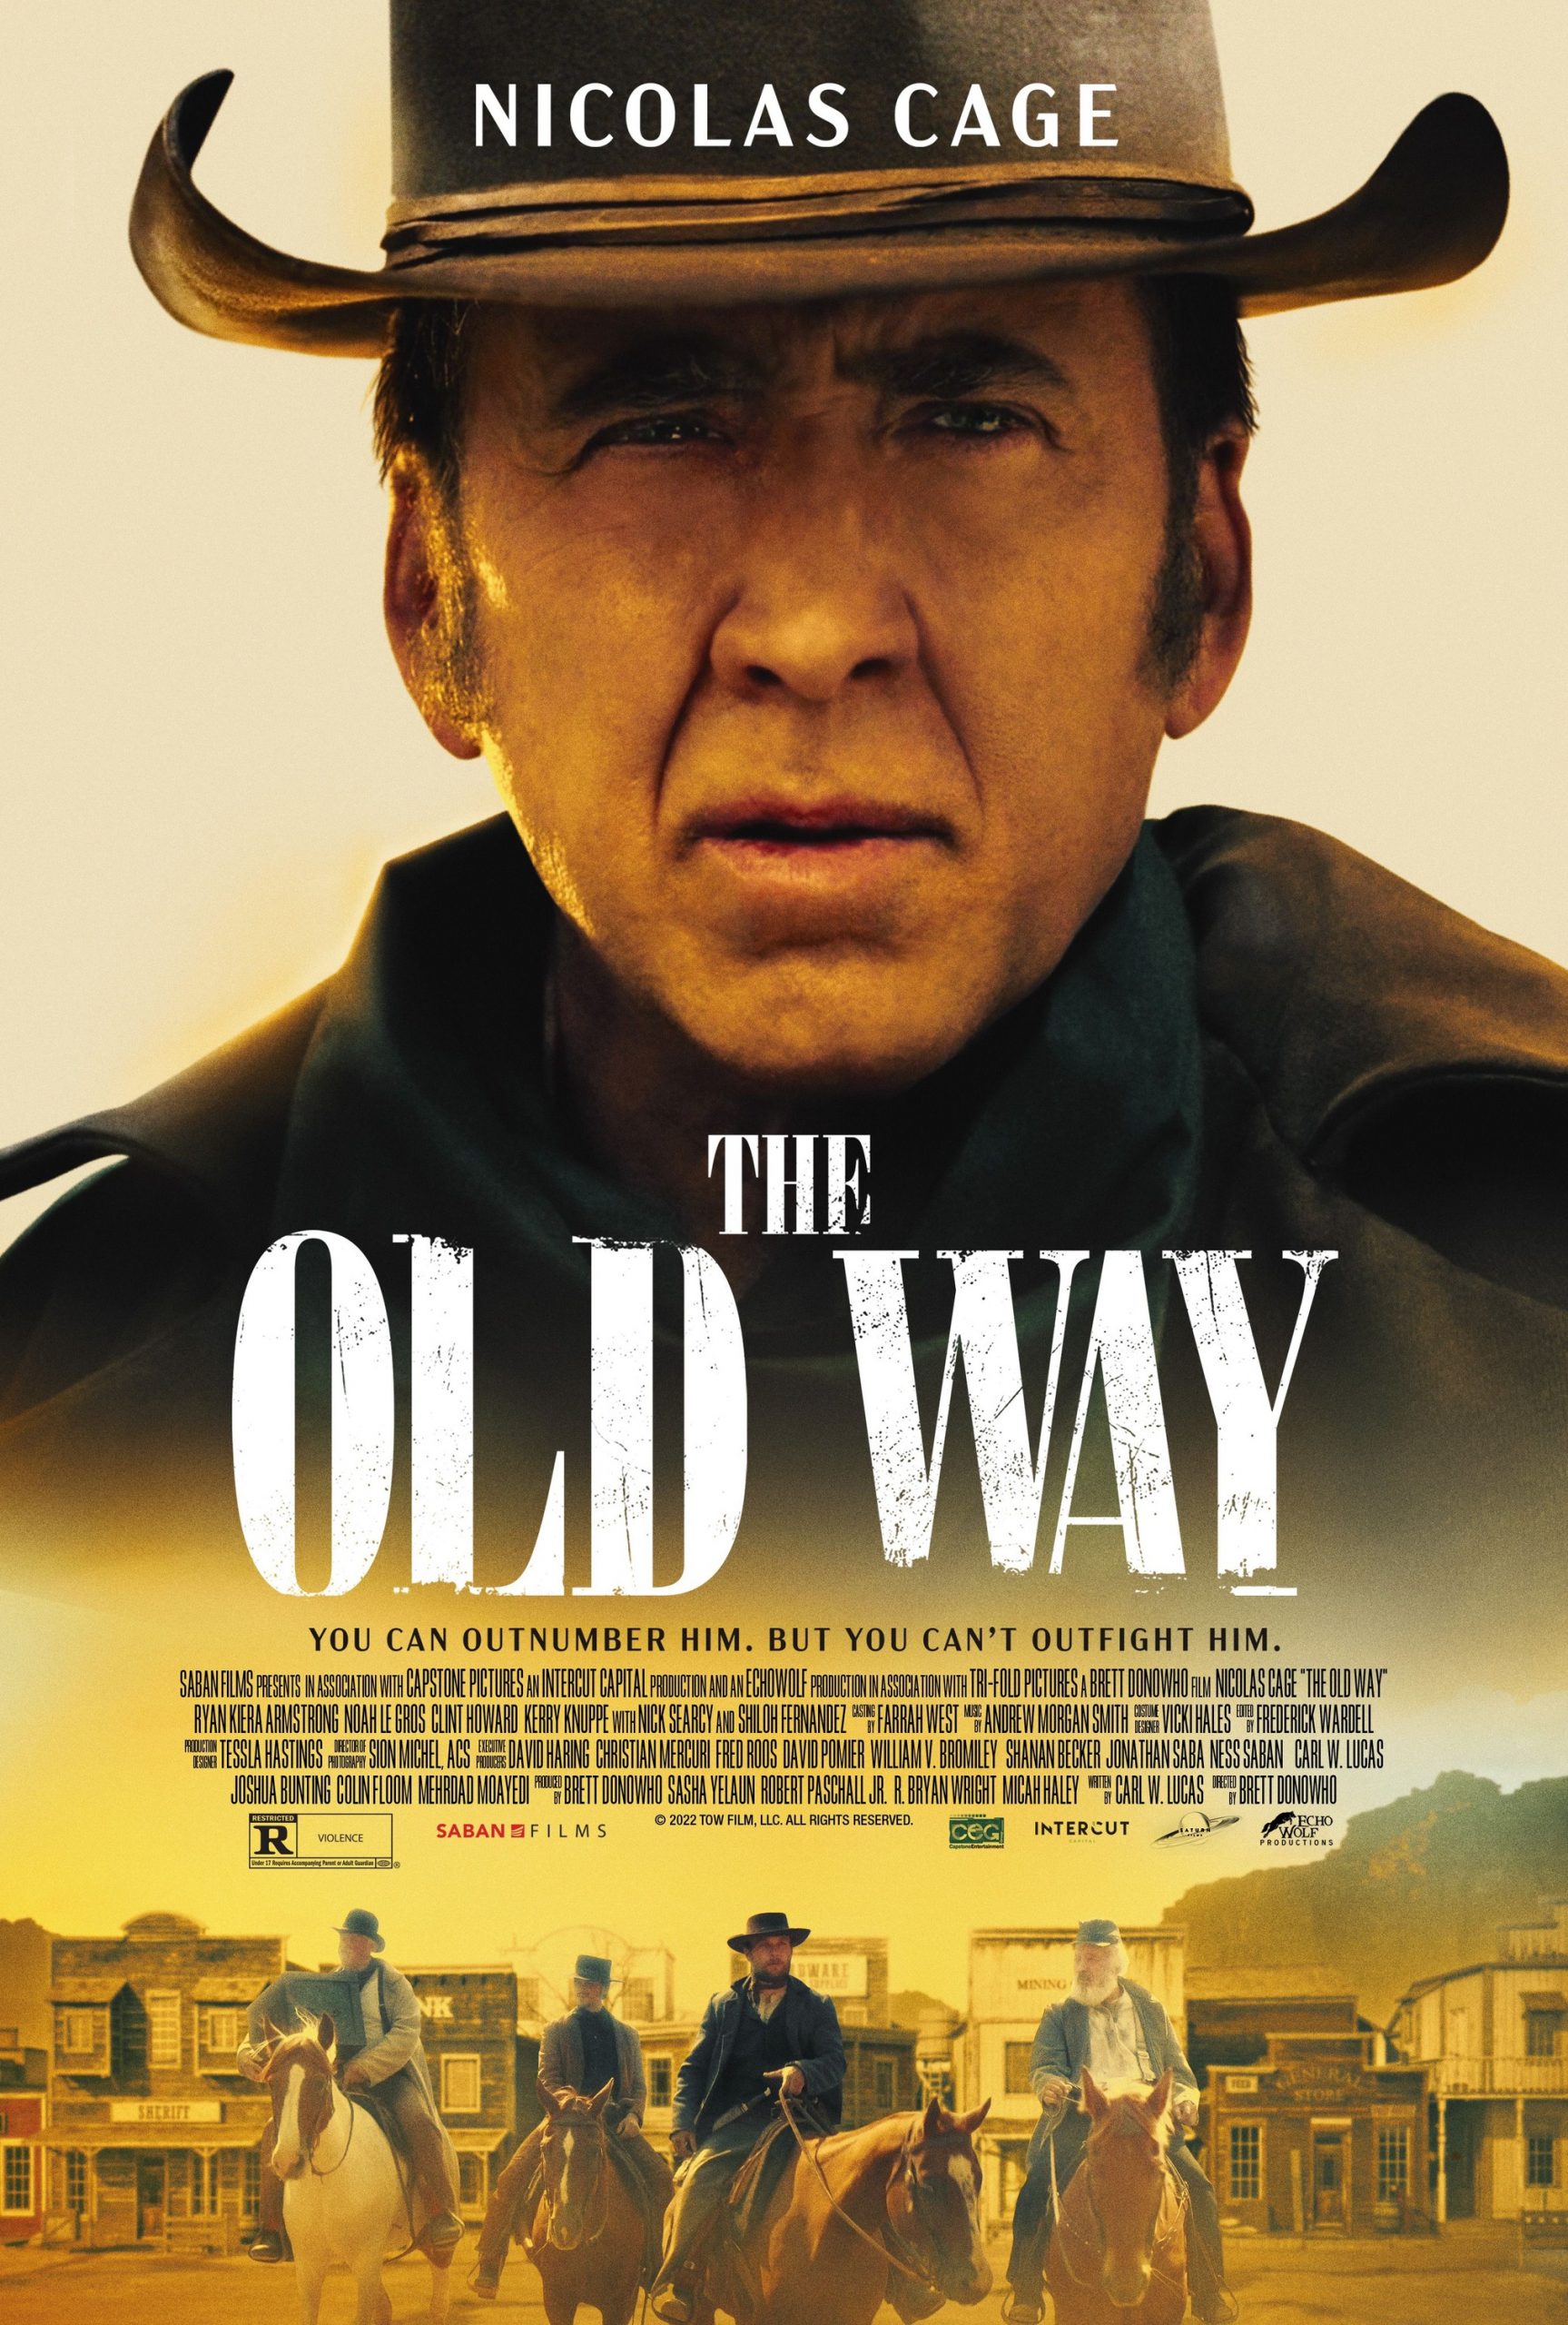 The Old Way I Primeiro faroeste de Nicolas Cage ganha trailer